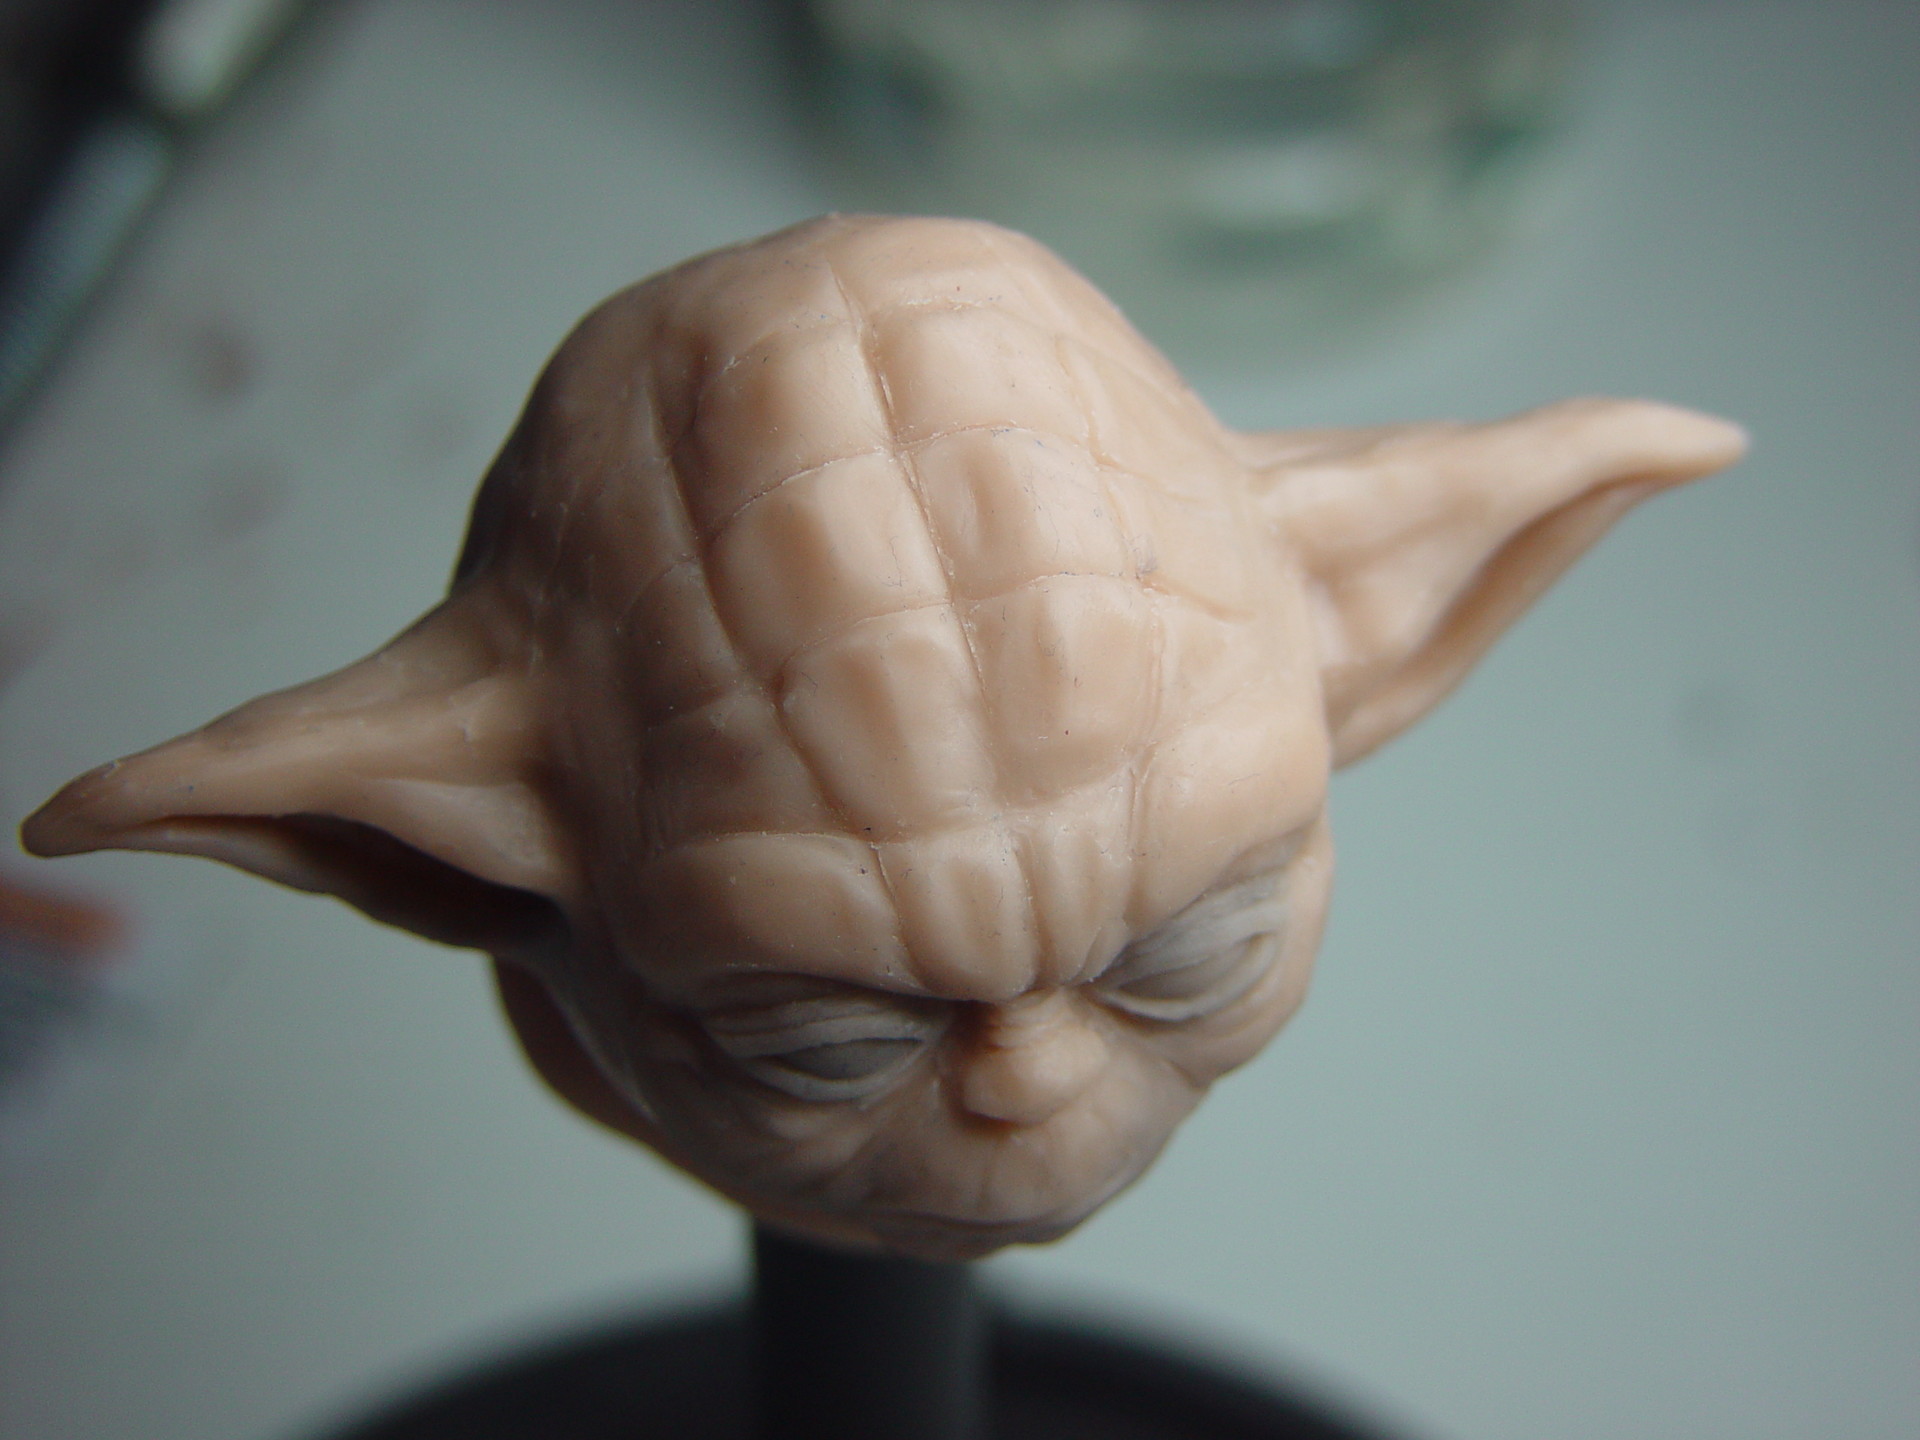 ArtStation - Yoda head and one hand in Super Sculpey